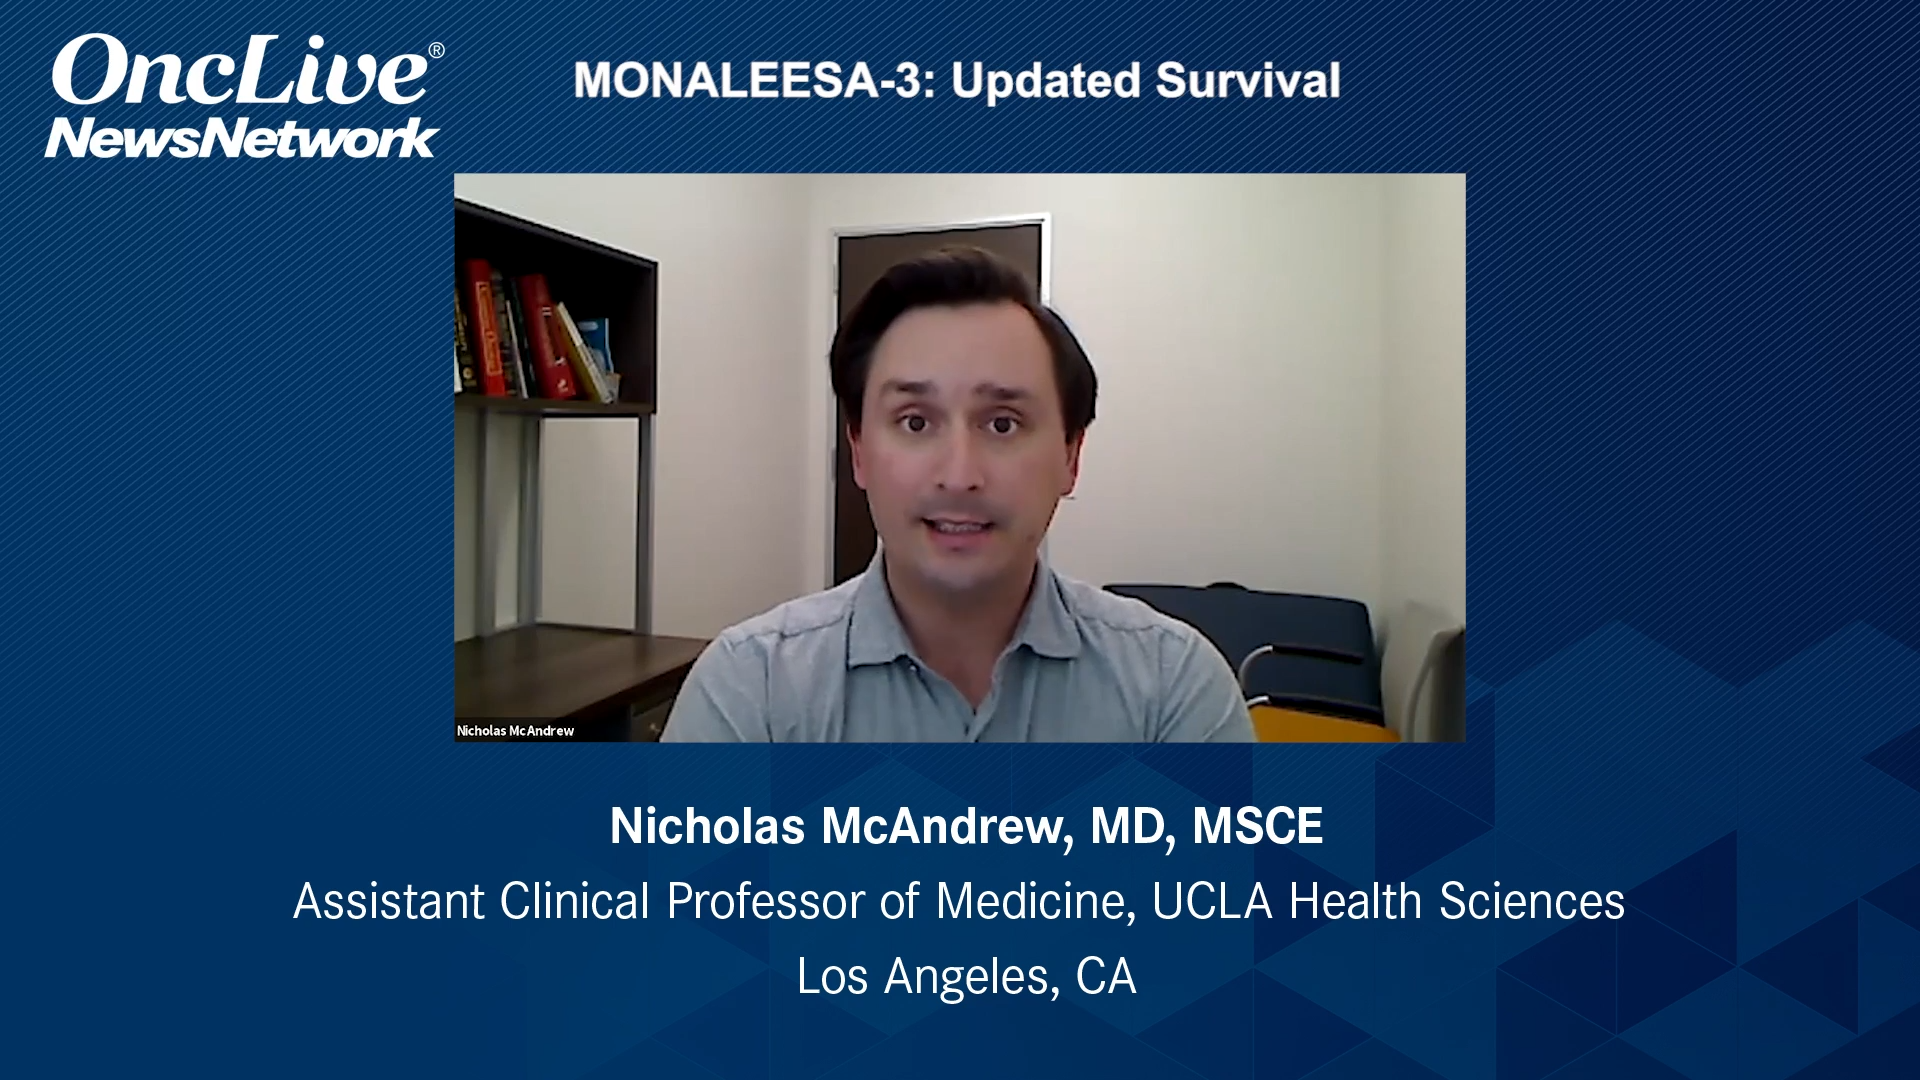 MONALEESA-3: Updated Survival